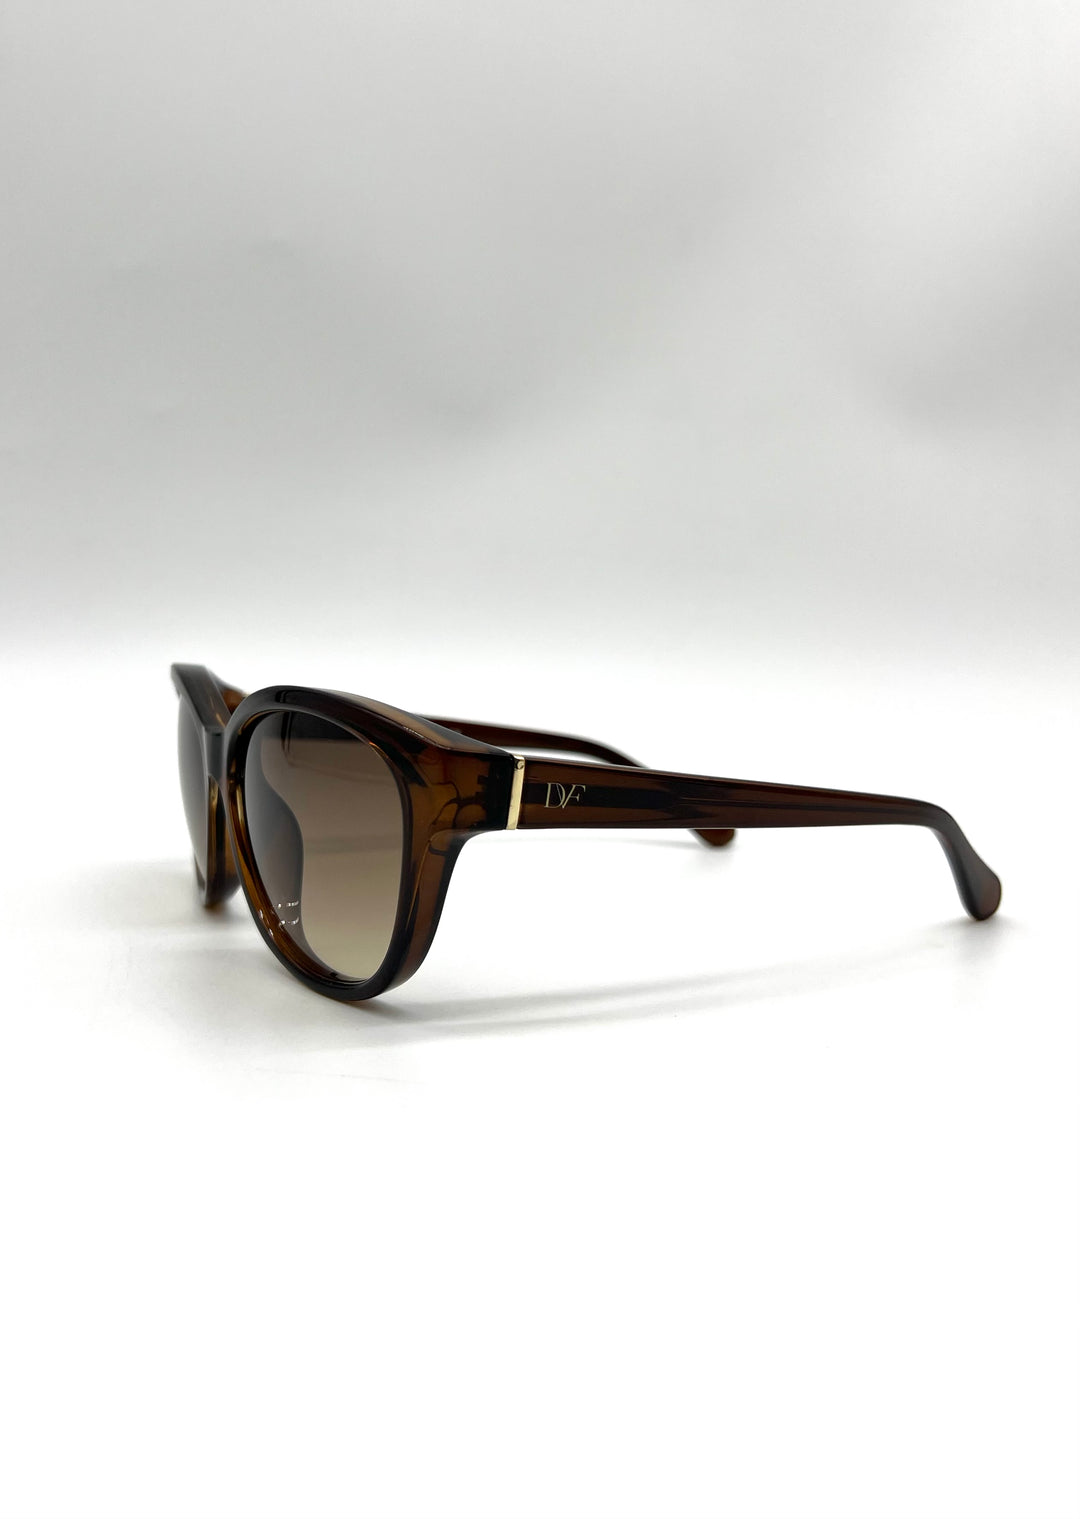 Diane von Furstenberg Sunglasses KATE DVF 611S 210 Clear Brown with Brown Lenses